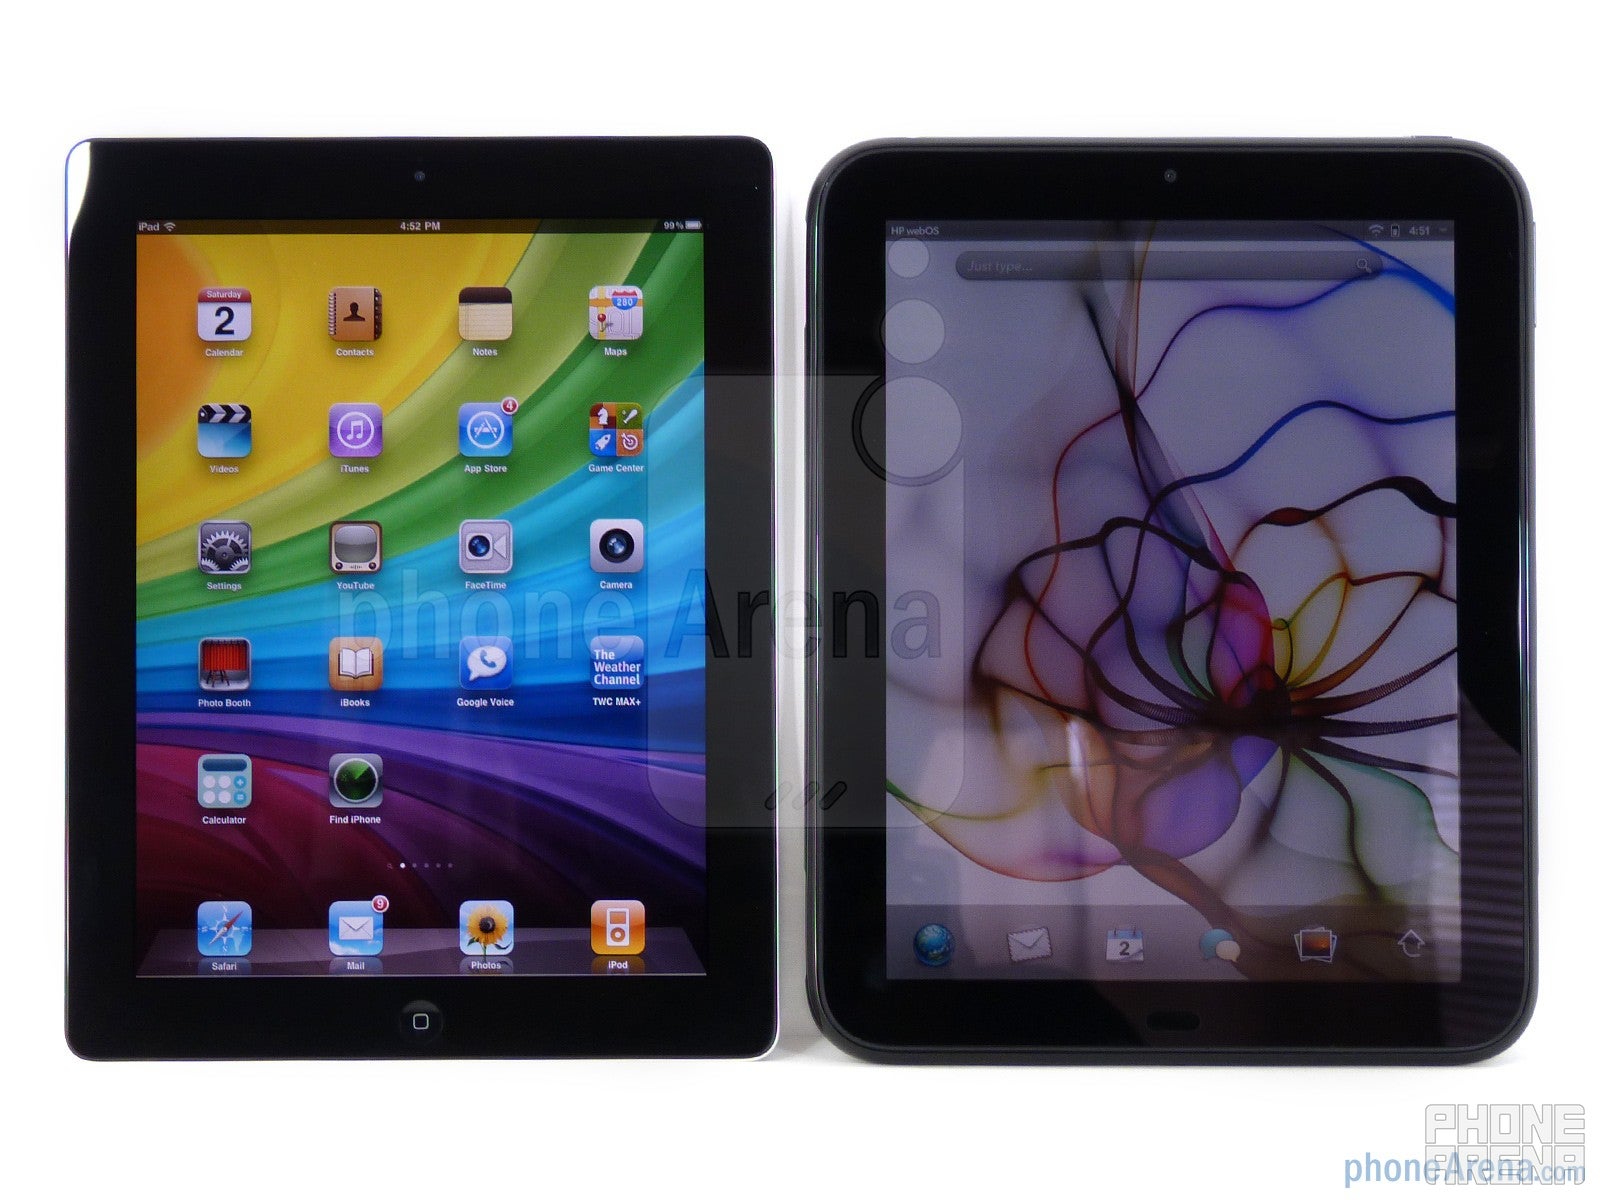 HP TouchPad vs Apple iPad 2